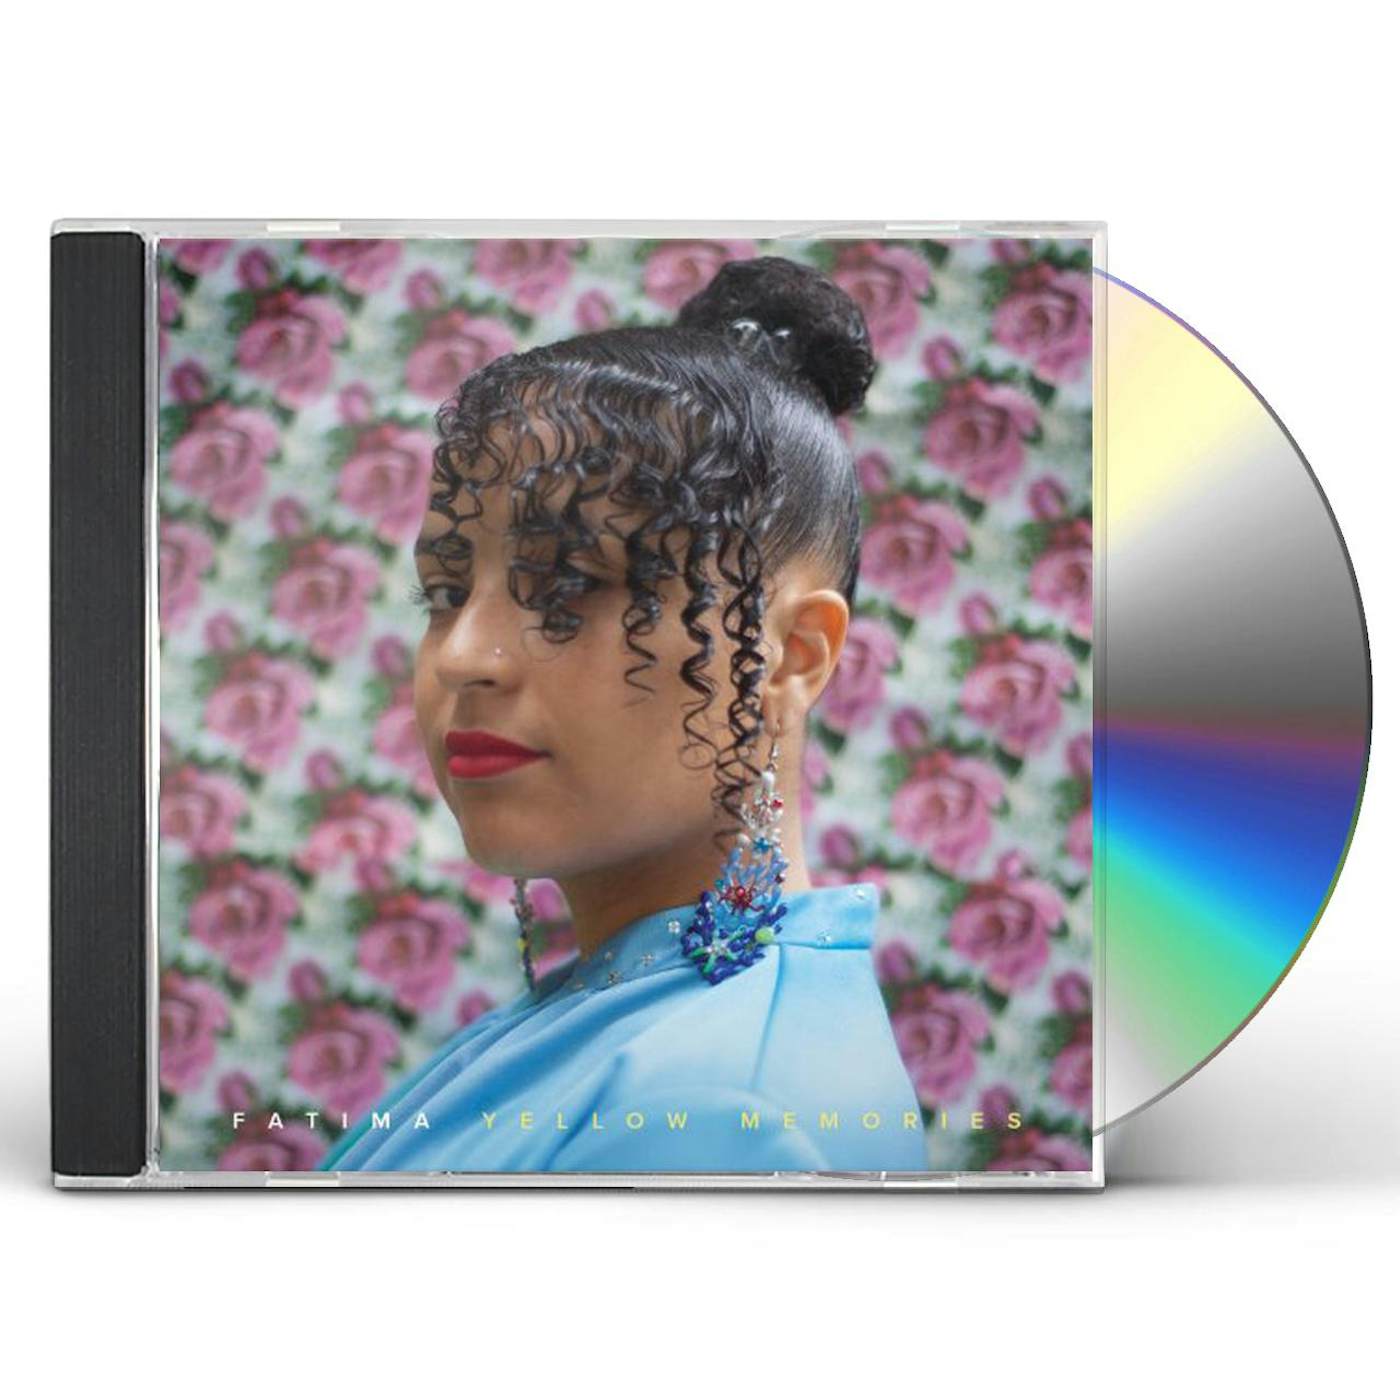 Fatima YELLOW MEMORIES CD